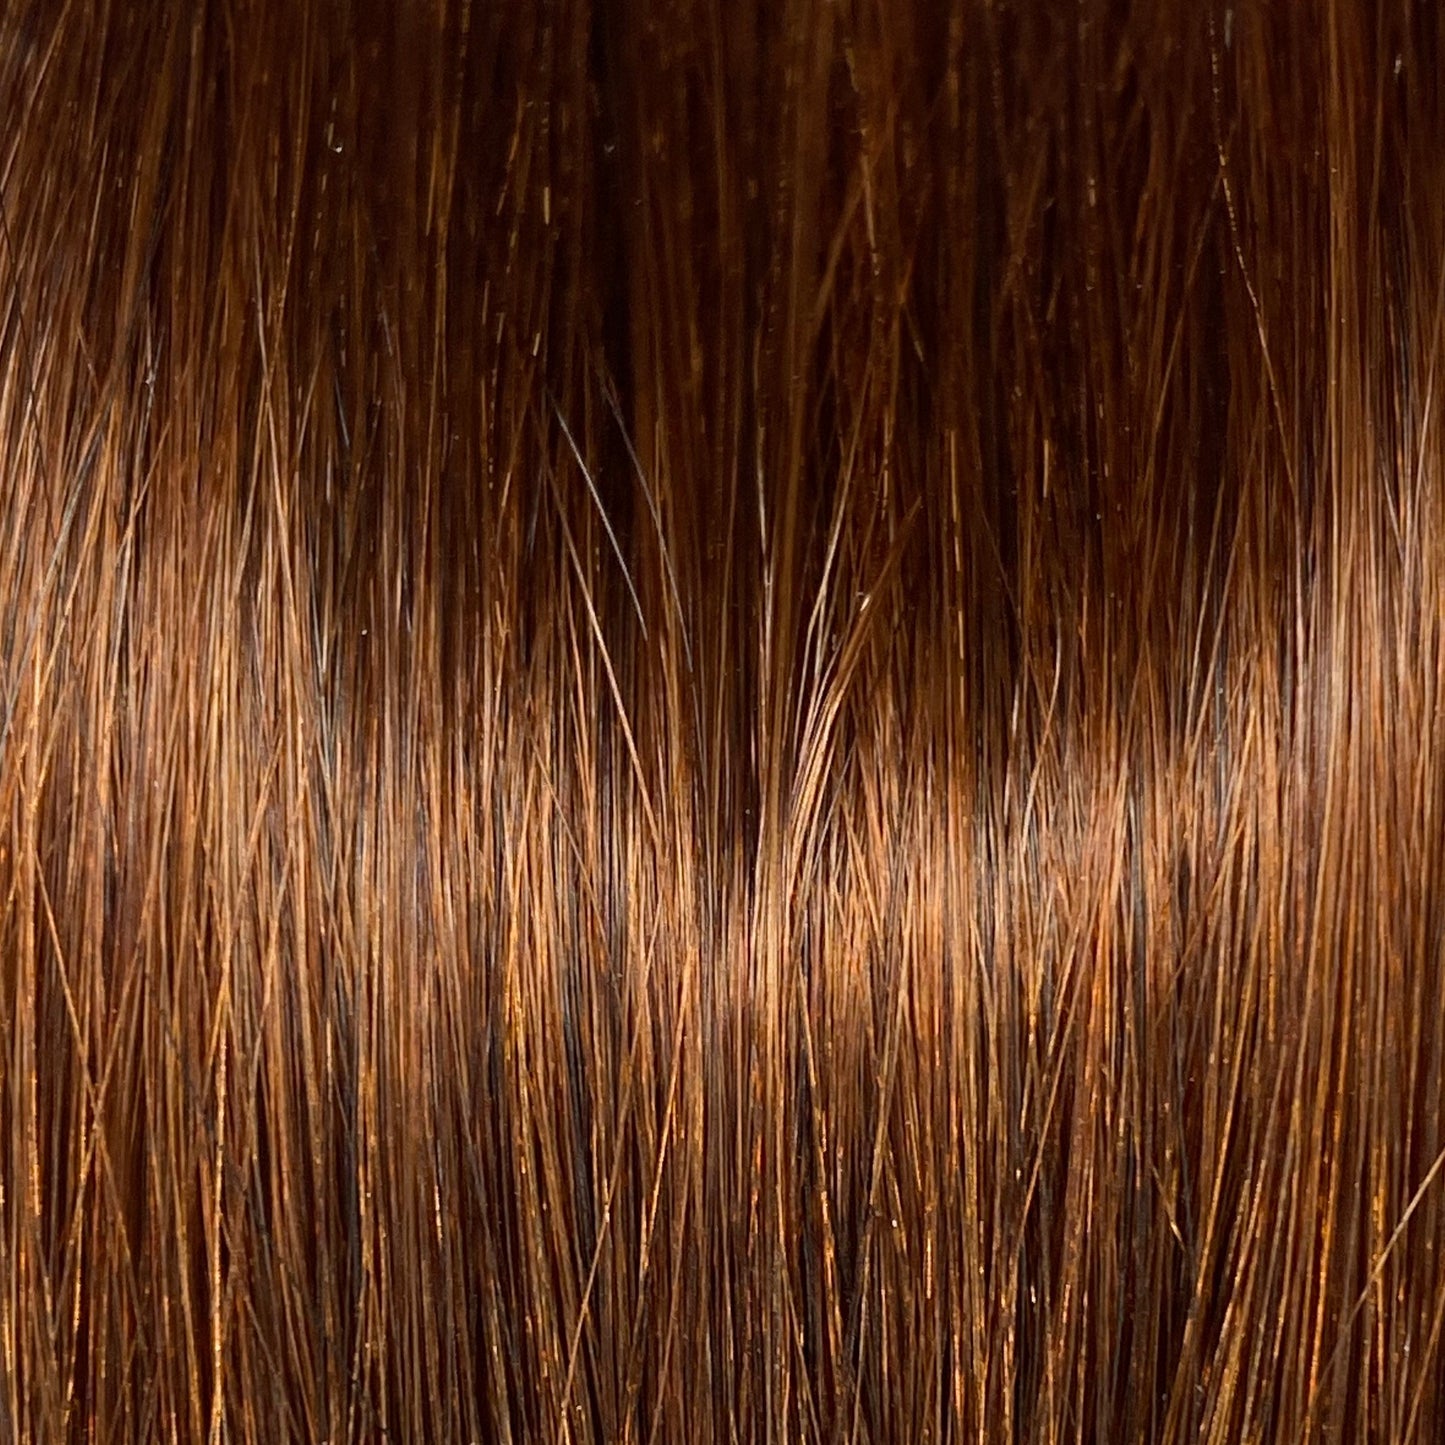 Fusion hair extensions #33 - 50cm/20 inches - Light Mahogany Chestnut Fusion Euro So Cap 